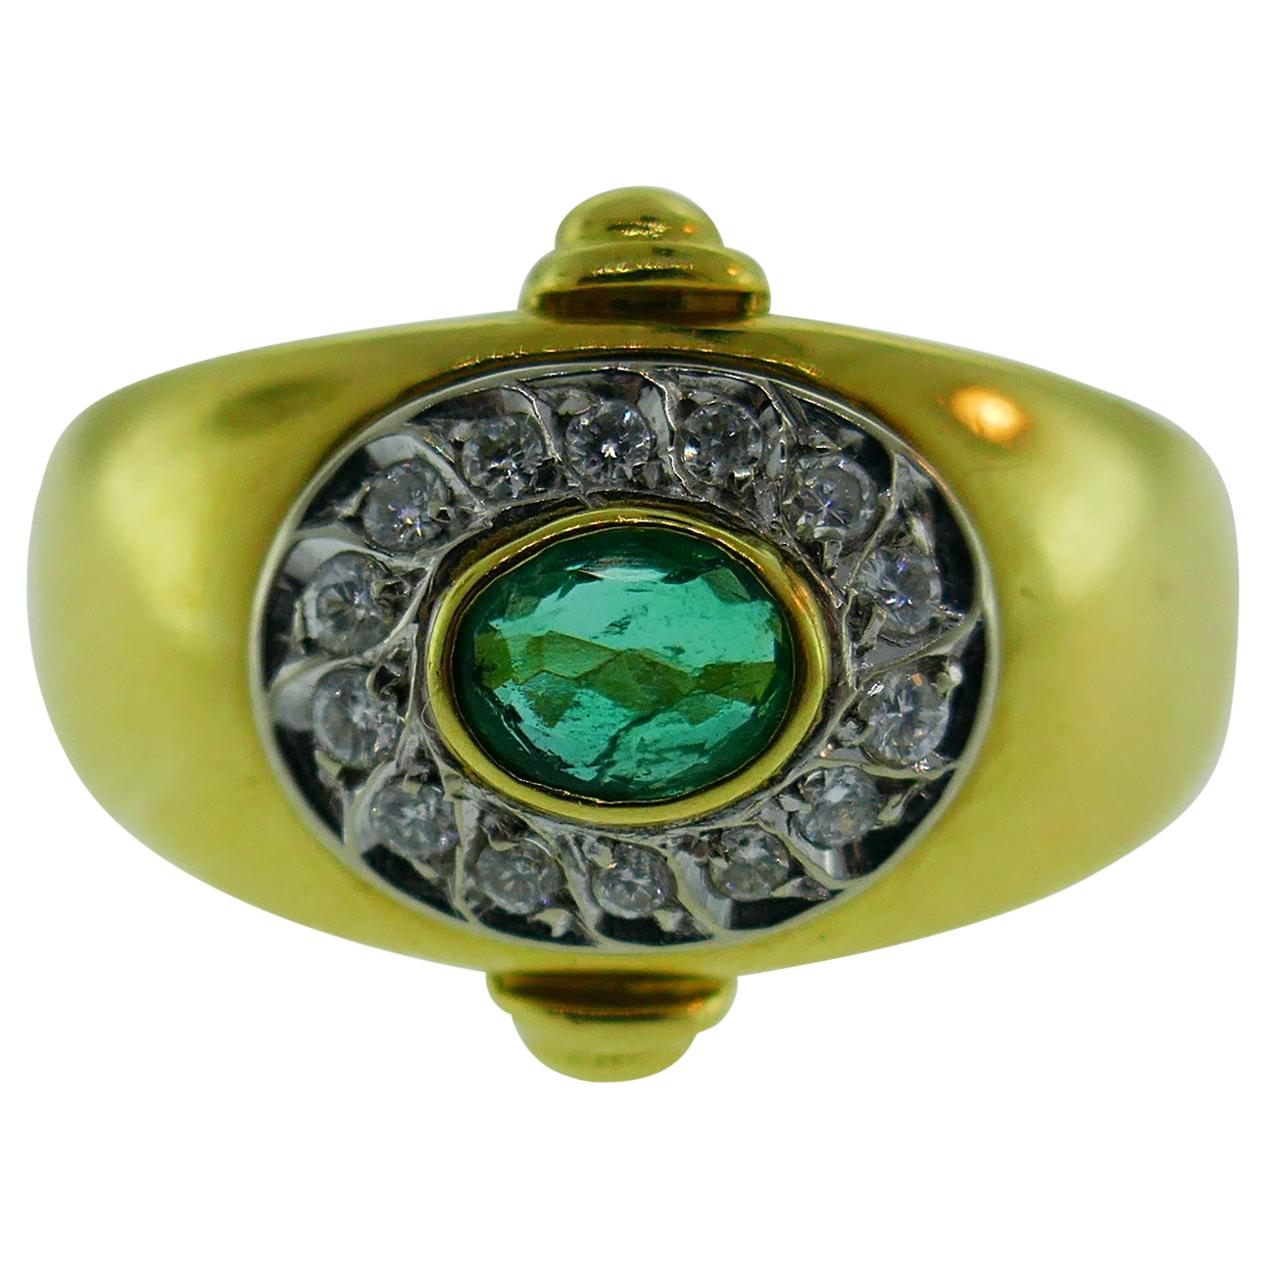 Cartier 18 Karat Yellow Gold, Emerald and Diamond Ring Vintage, circa 1970s